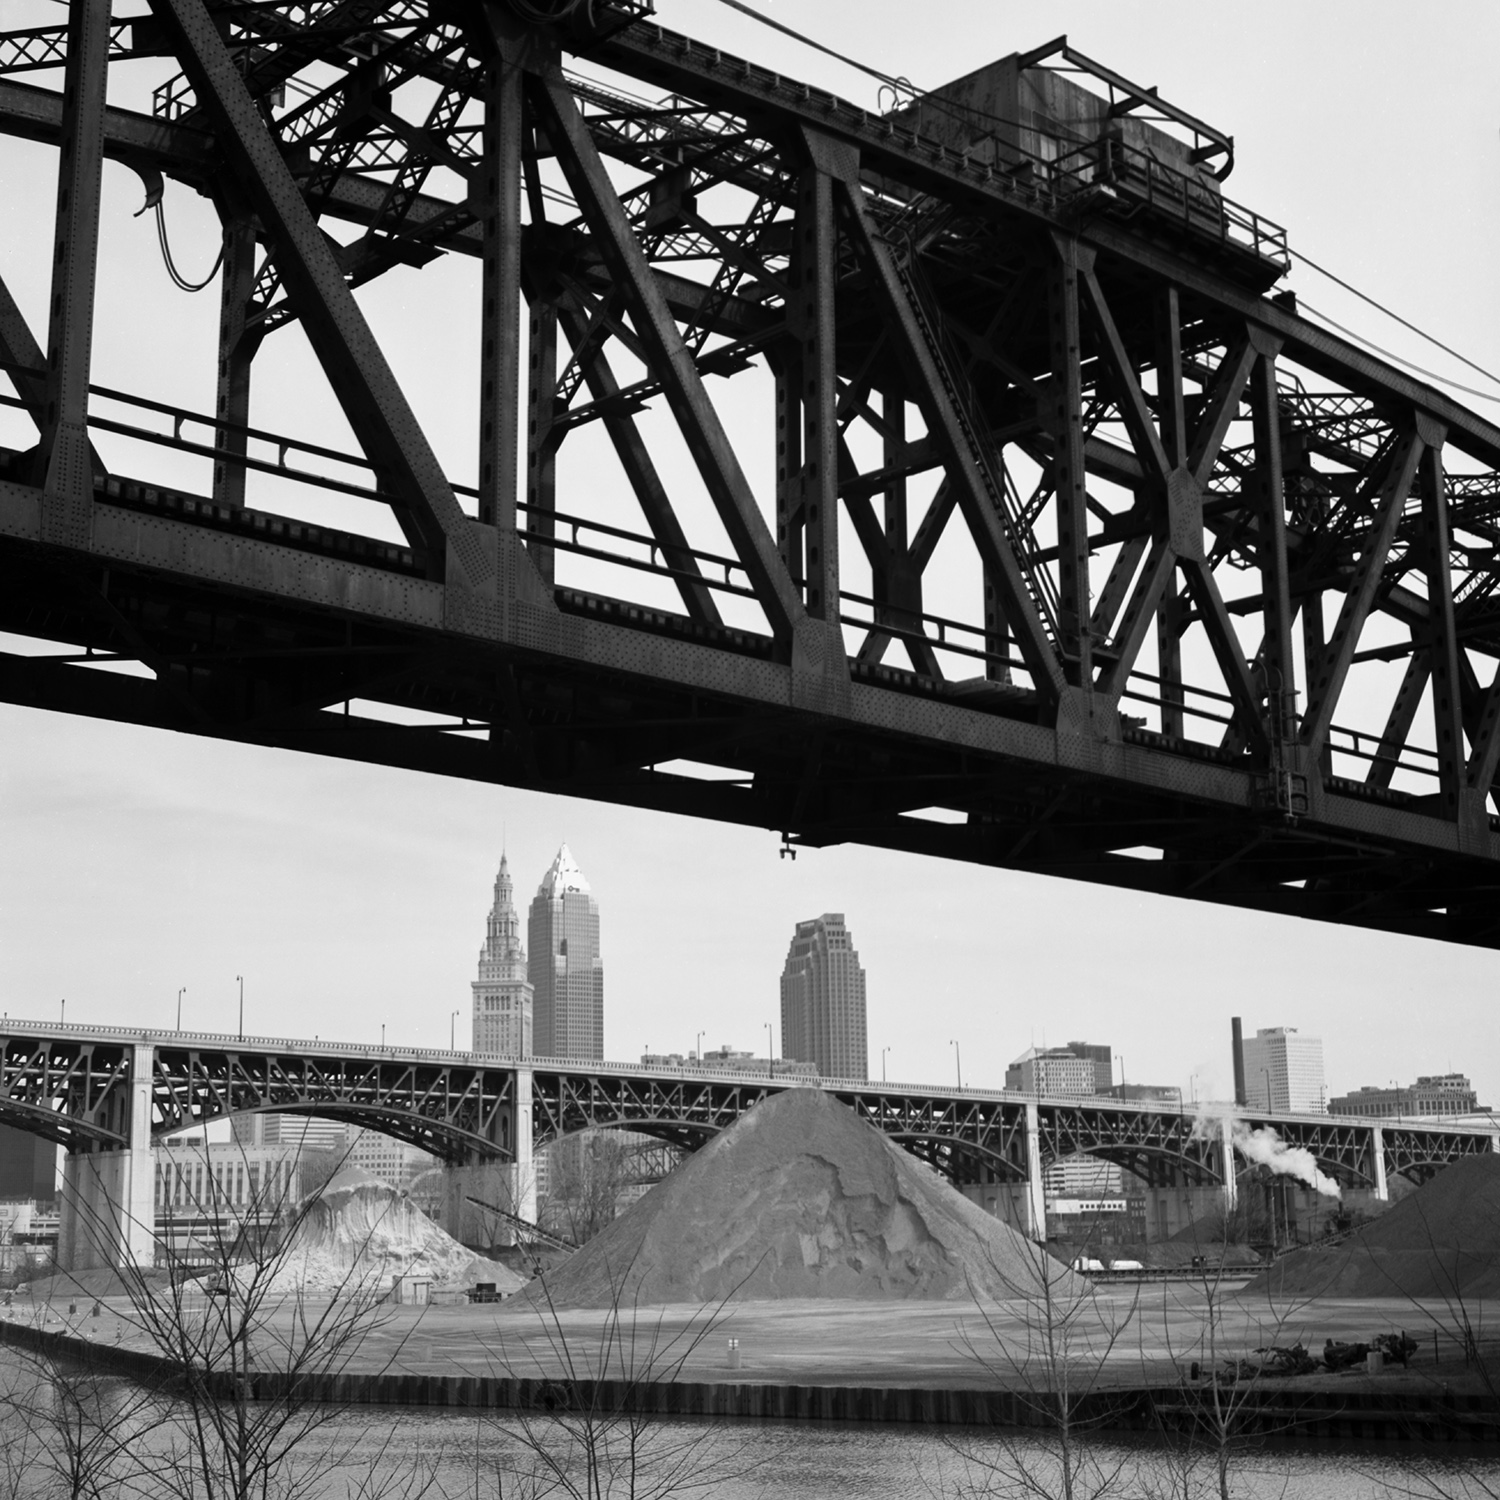  Cleveland skyline Cleveland, OH 6x6 color negative film, converte to BW 